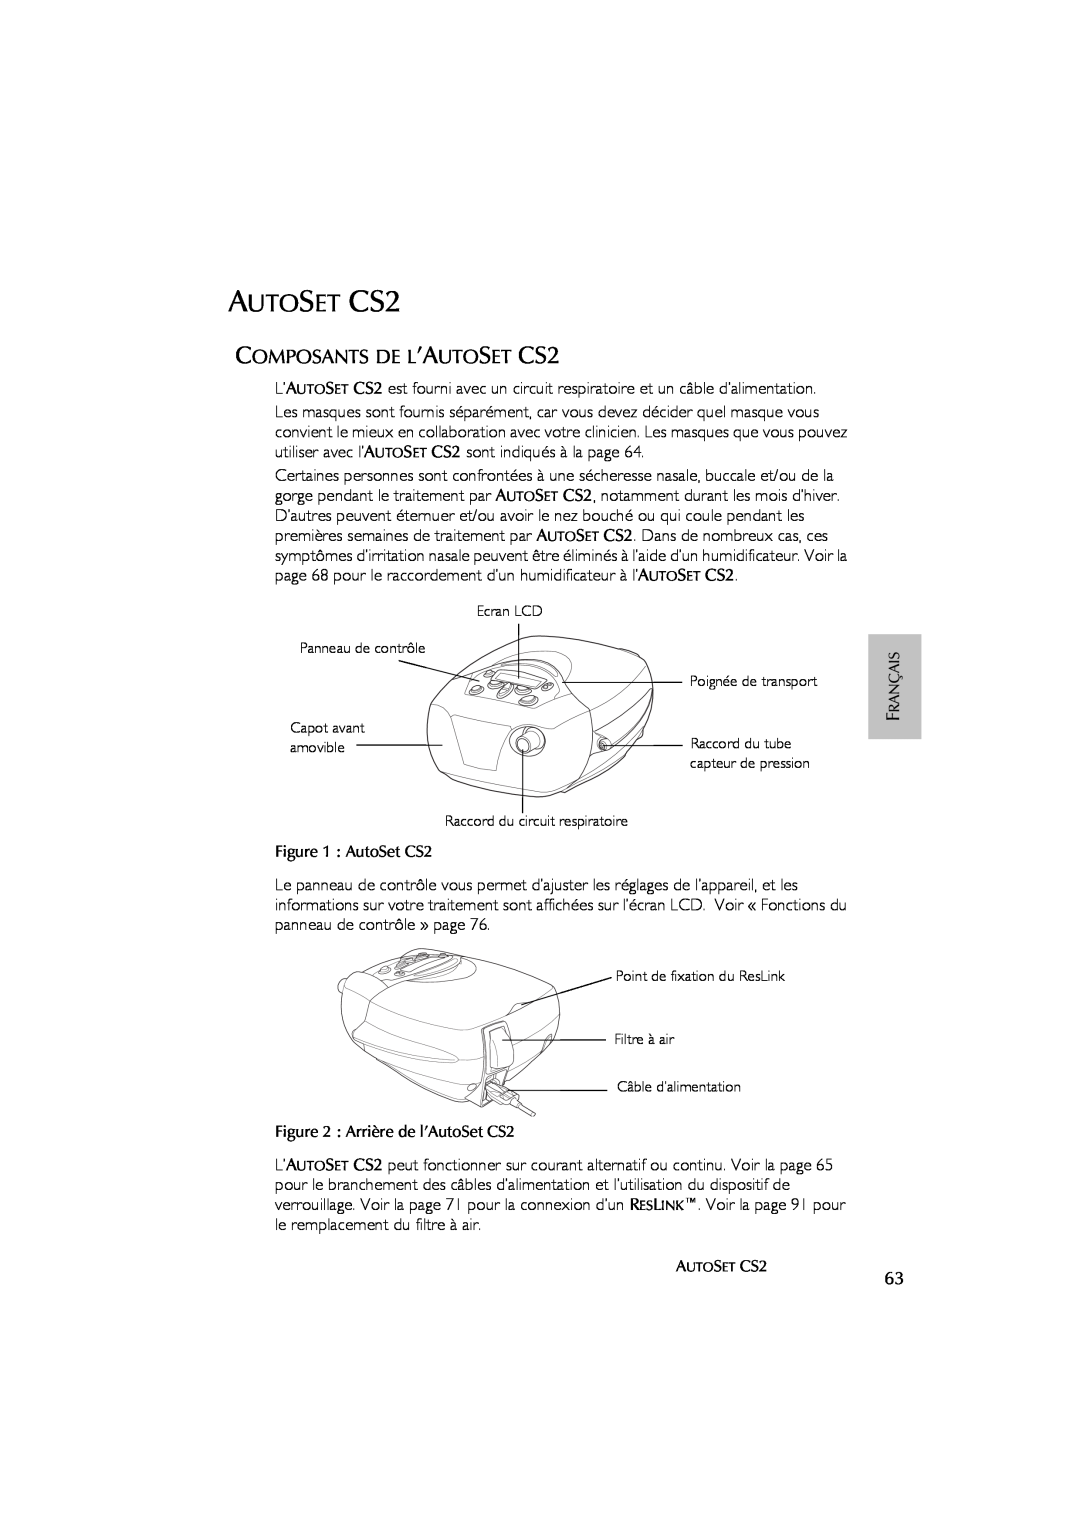 ResMed AutoSet CS 2 user manual COMPOSANTS DE L’AUTOSET CS2 